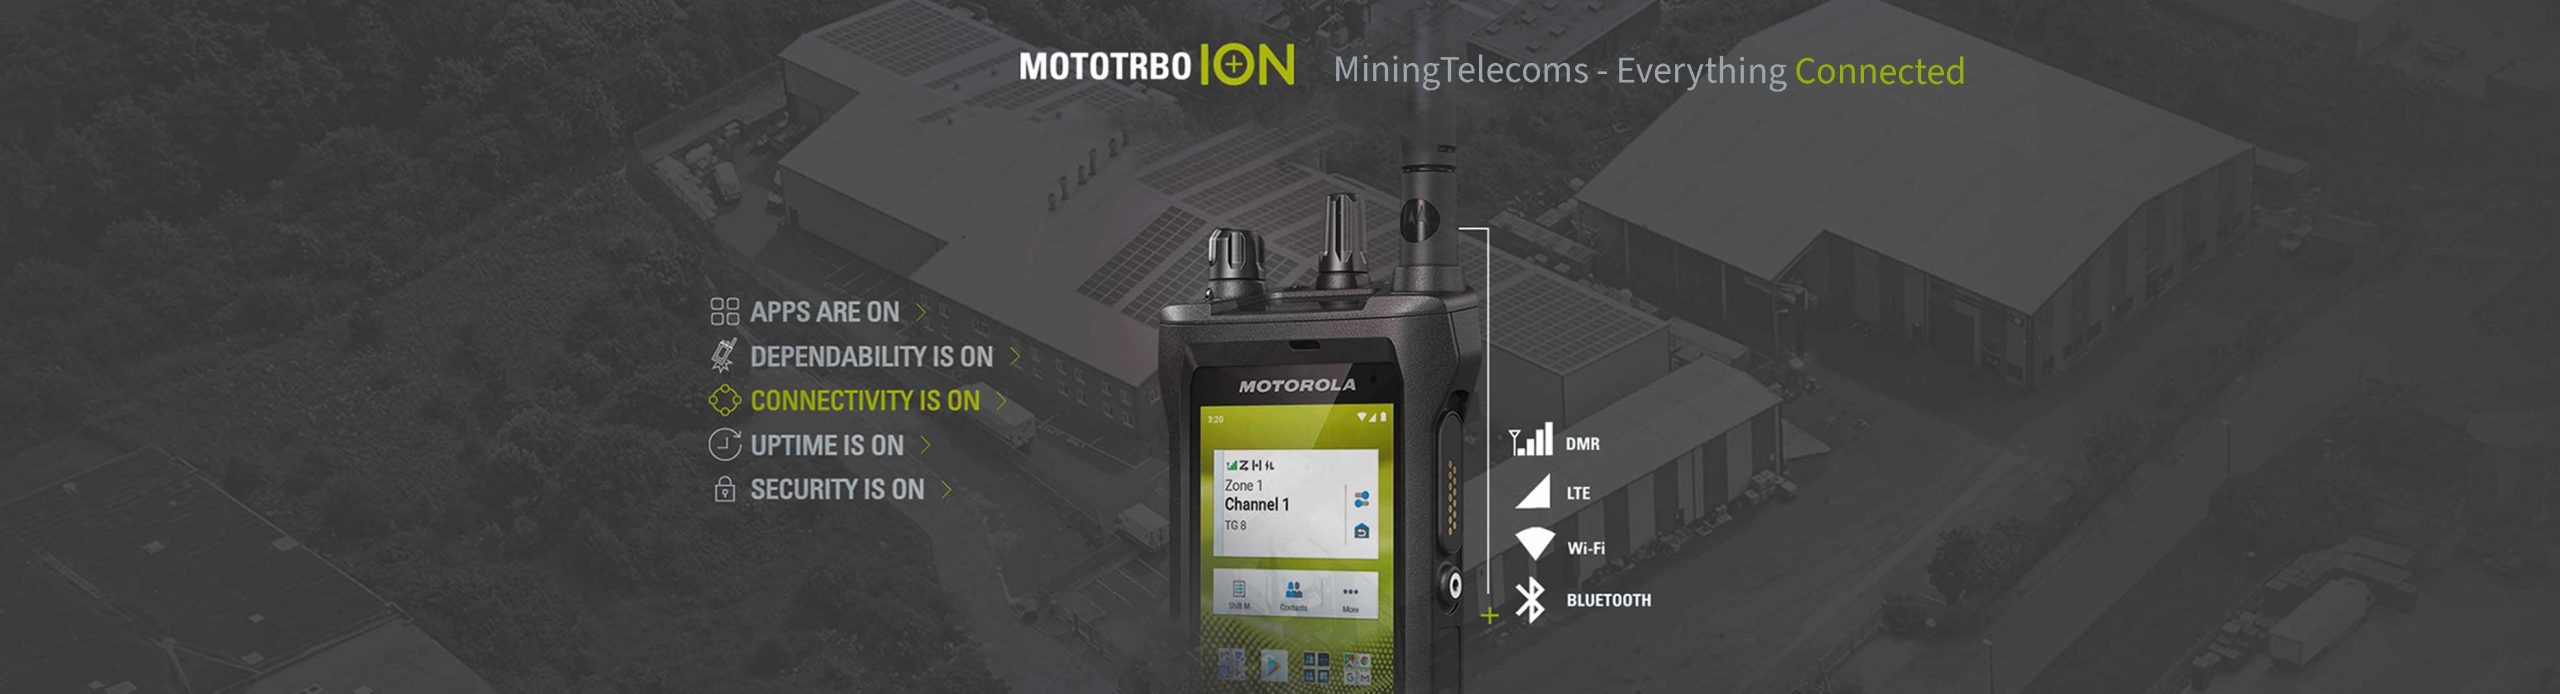 MOTOTRBO-ION-MiningTelecoms-Australia-Everything-Connected